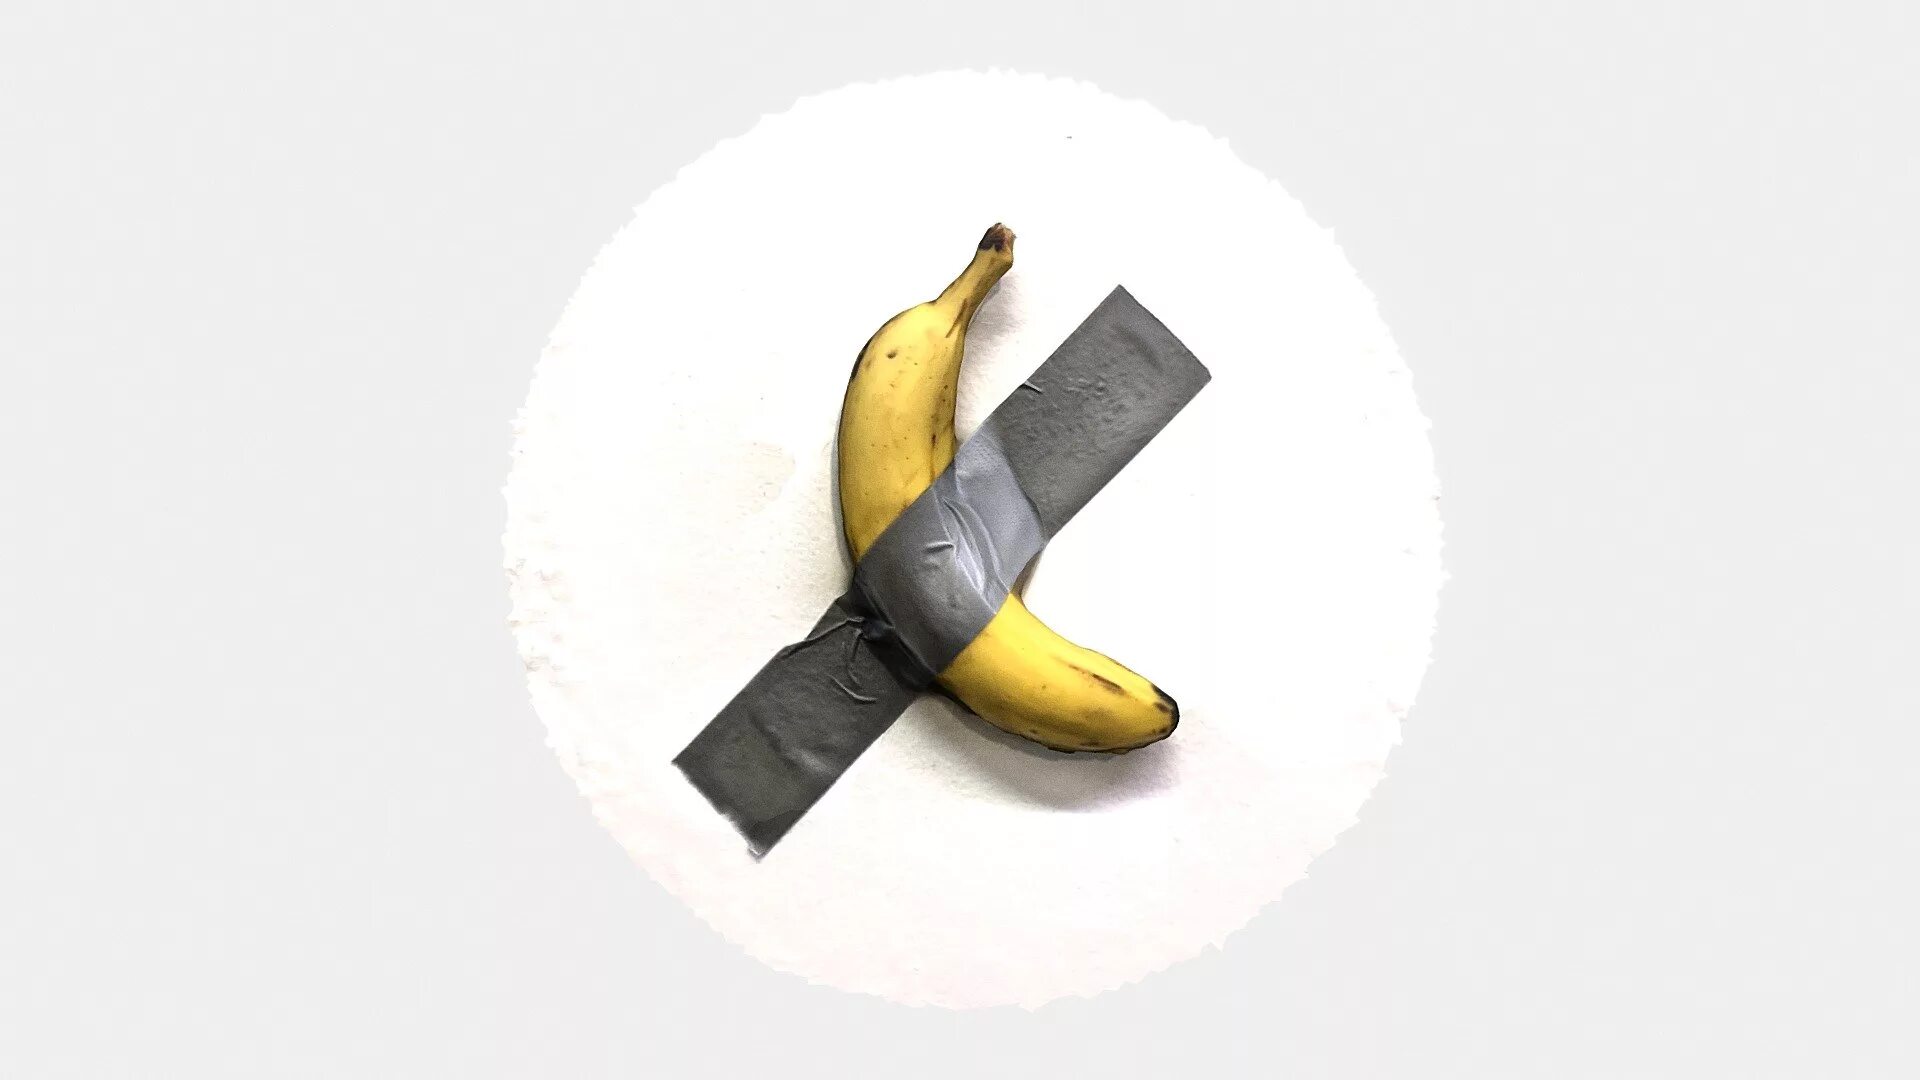 Https mp3muz cc. Арт банан Минимализм. Банан рисунок. Банан Мем. Современное искусство банан.